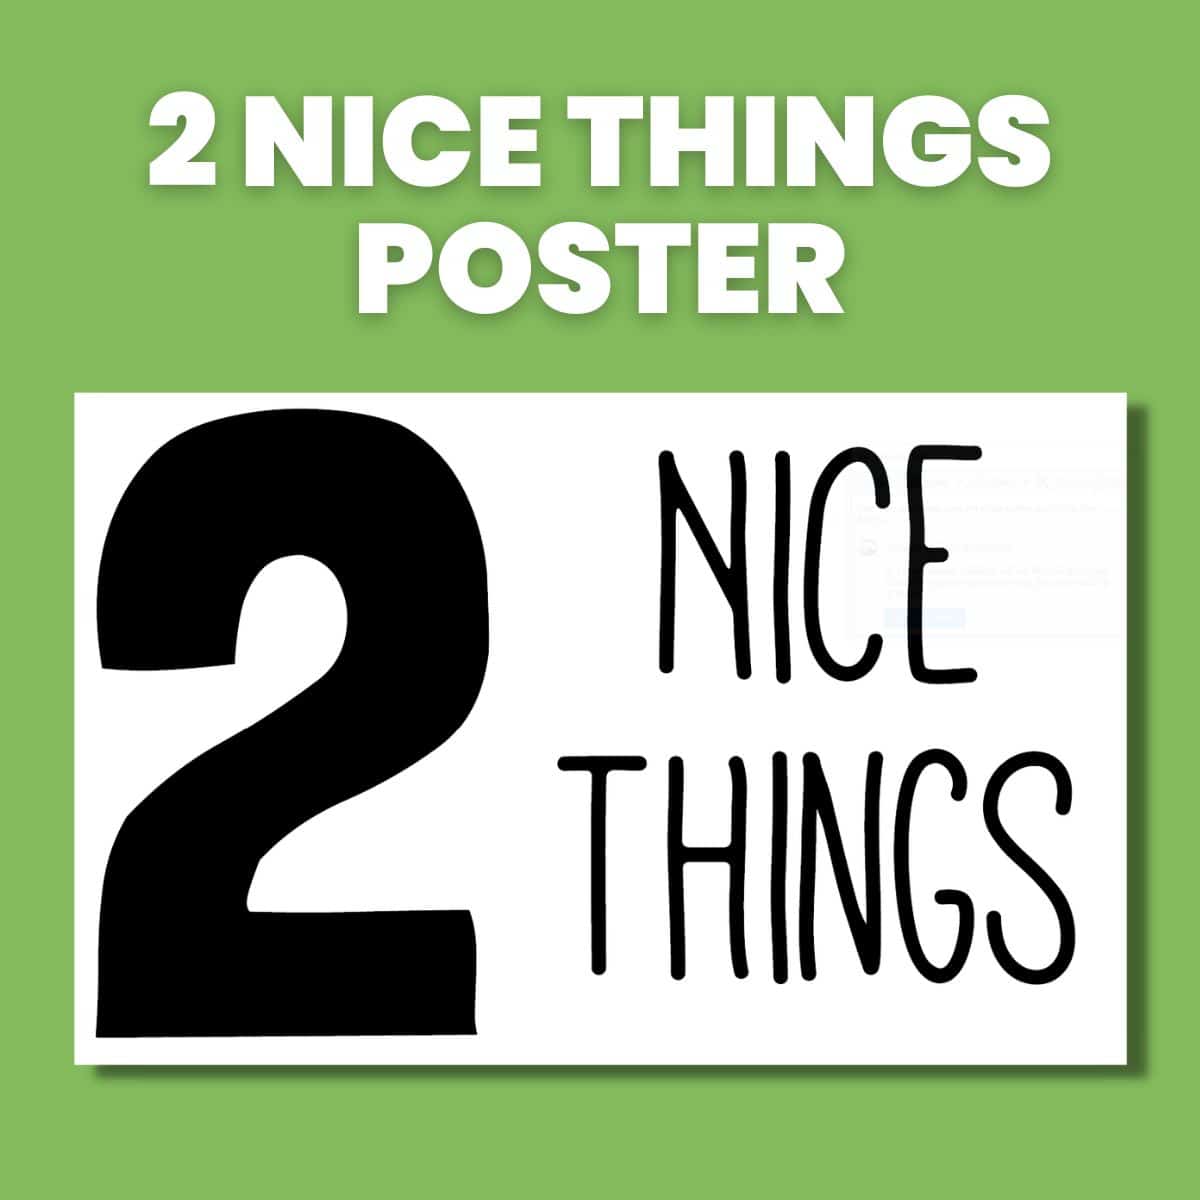 2 nice things poster